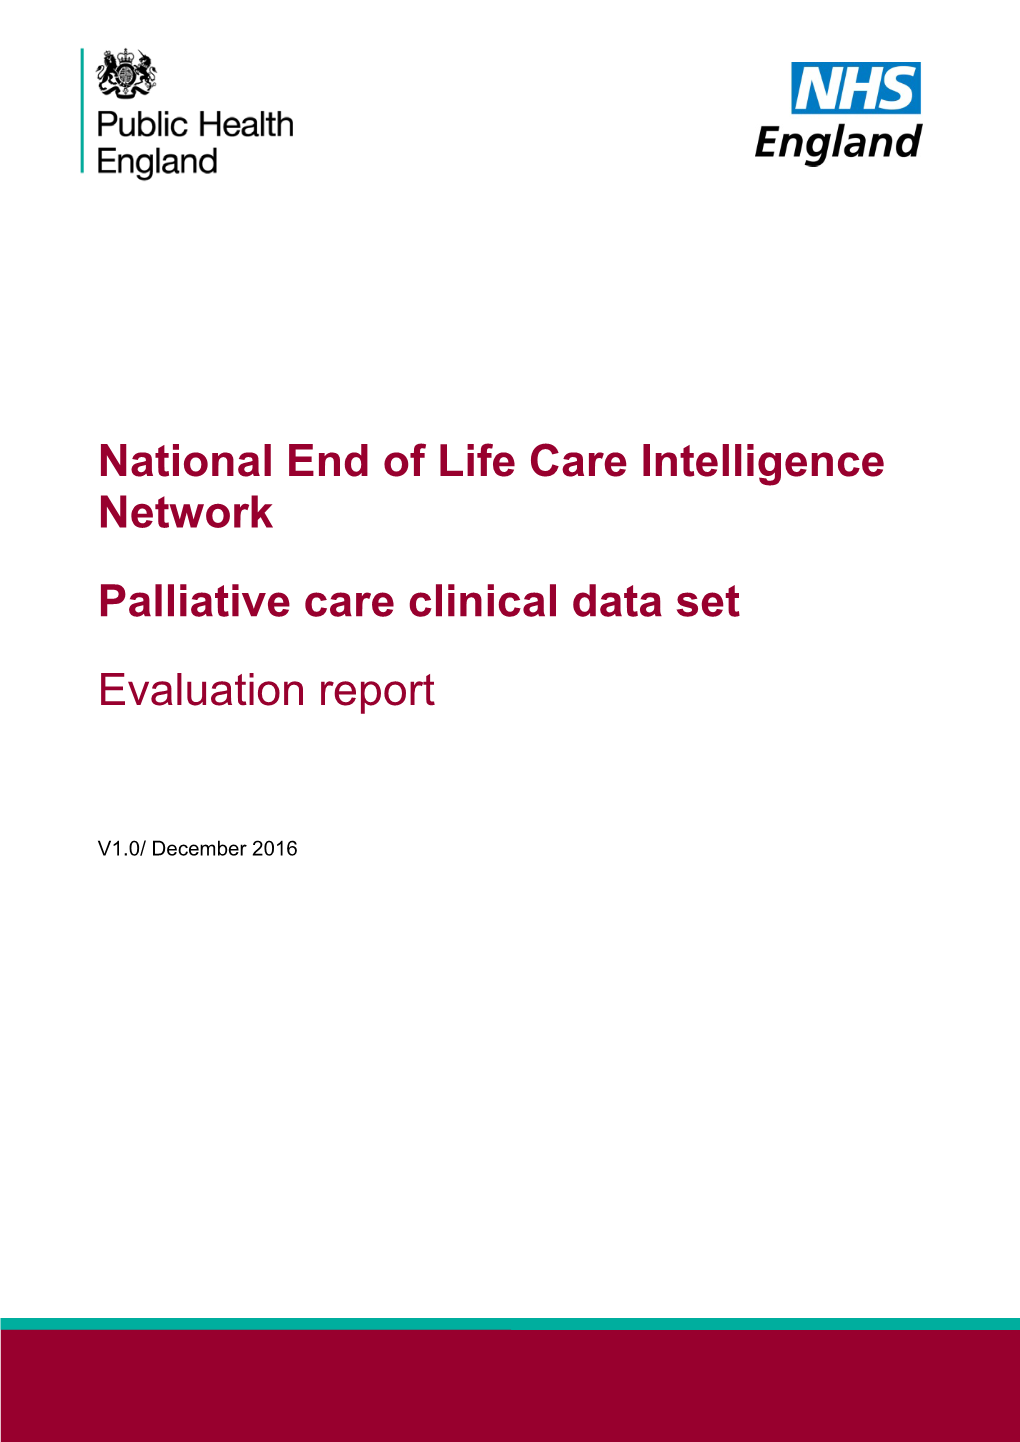 Palliative Care Clinical Data Set: Evaluation Report